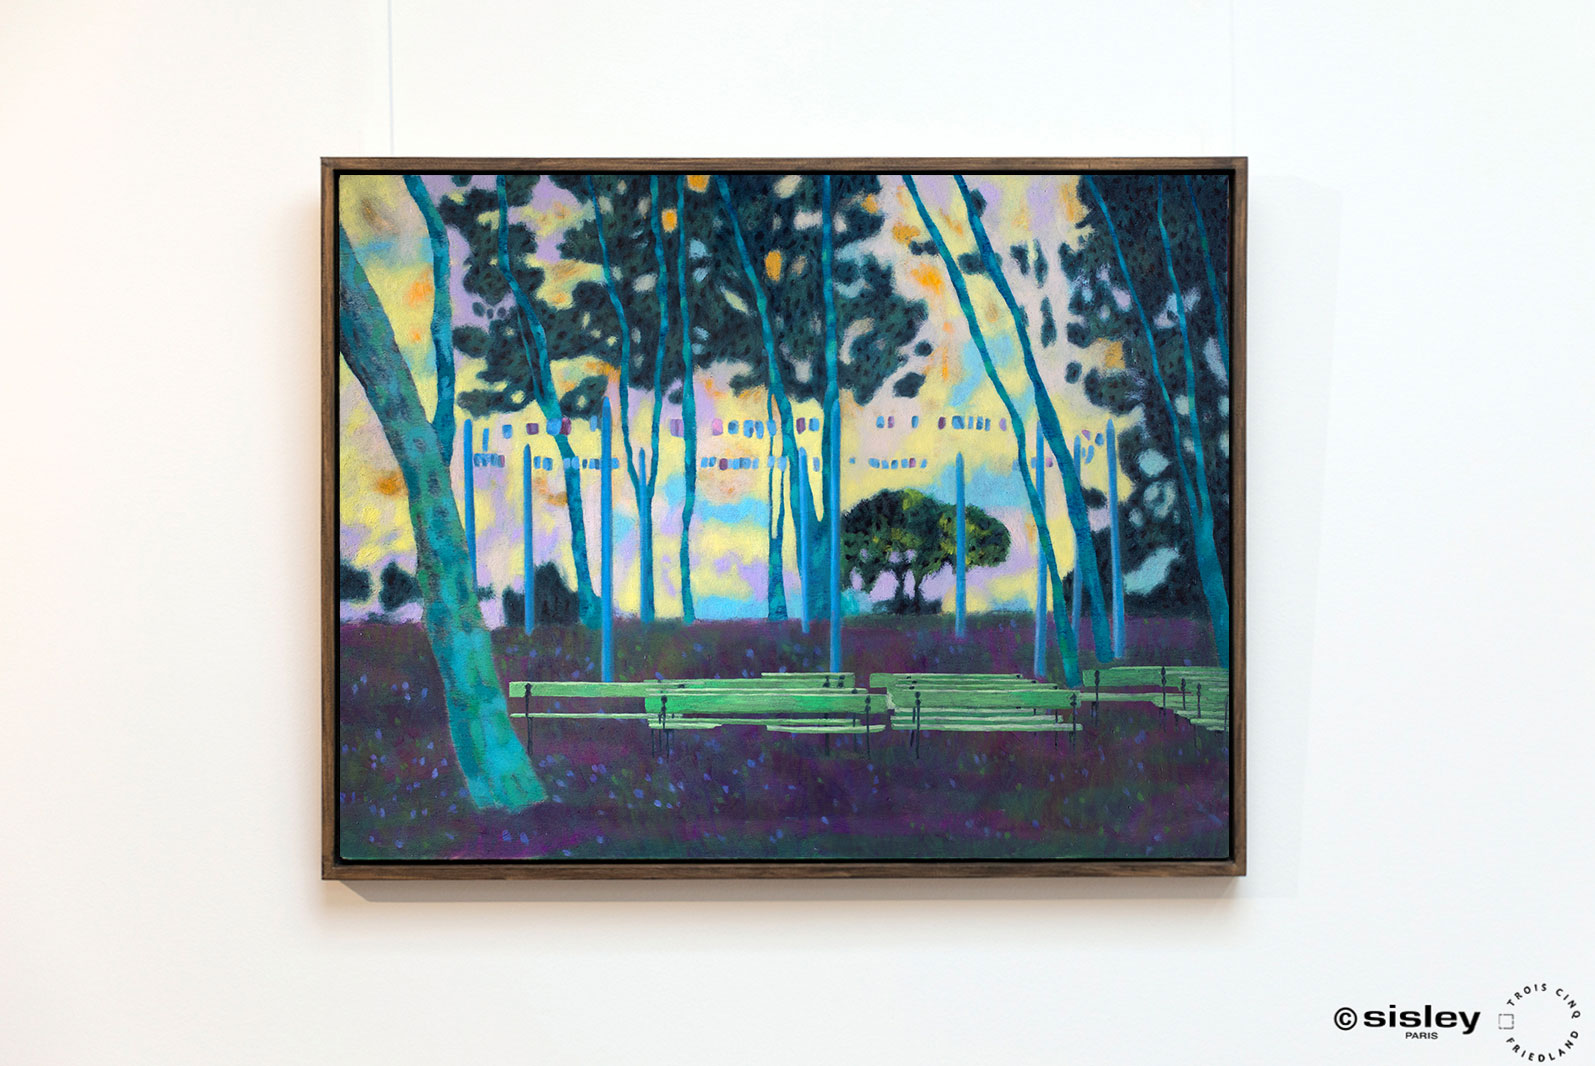 Karolina Orzełek, "Evenfall", 2020, 65 x 50 cm, oil on panel